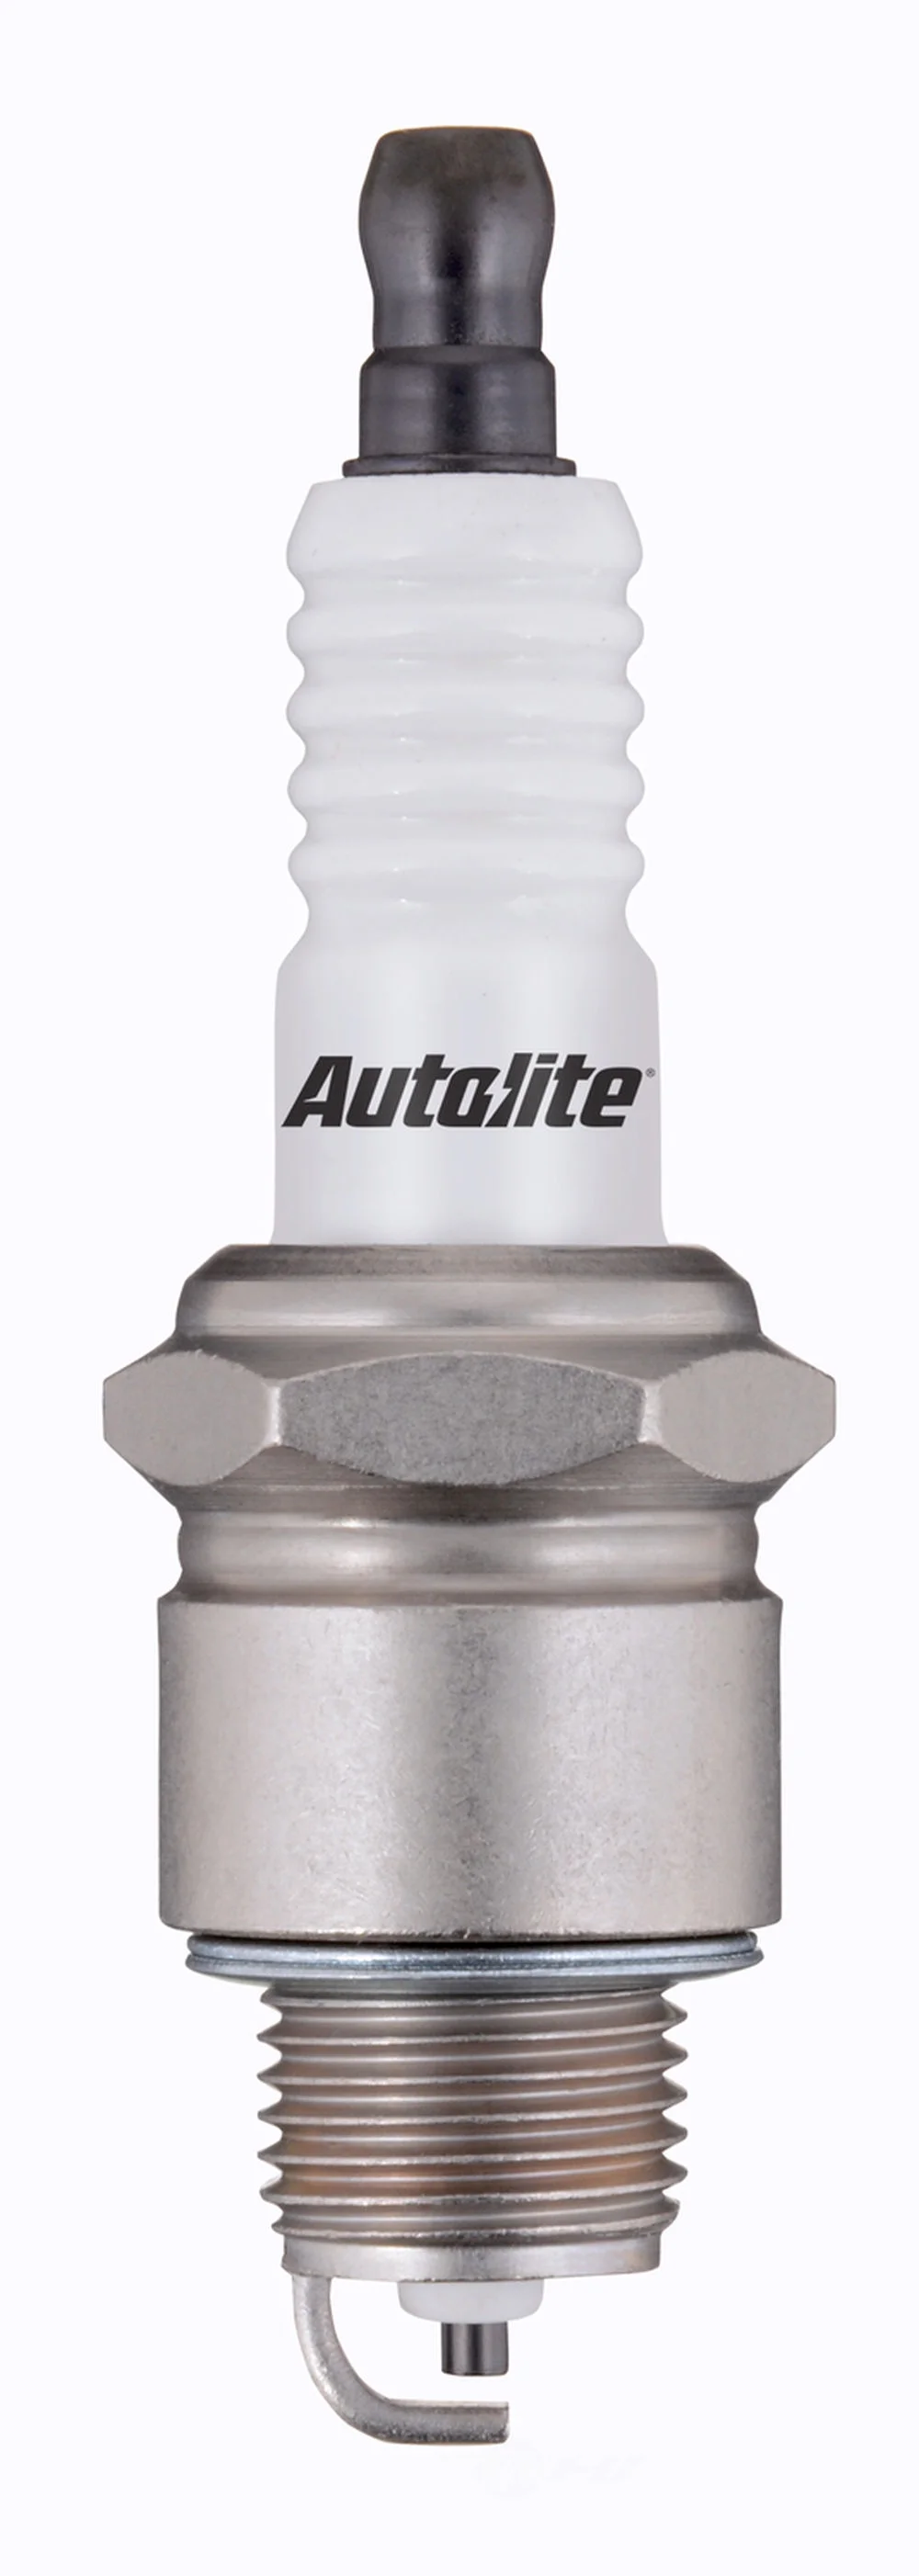 Autolite 437 Copper Non-resistor Spark Plug (4 Pack)